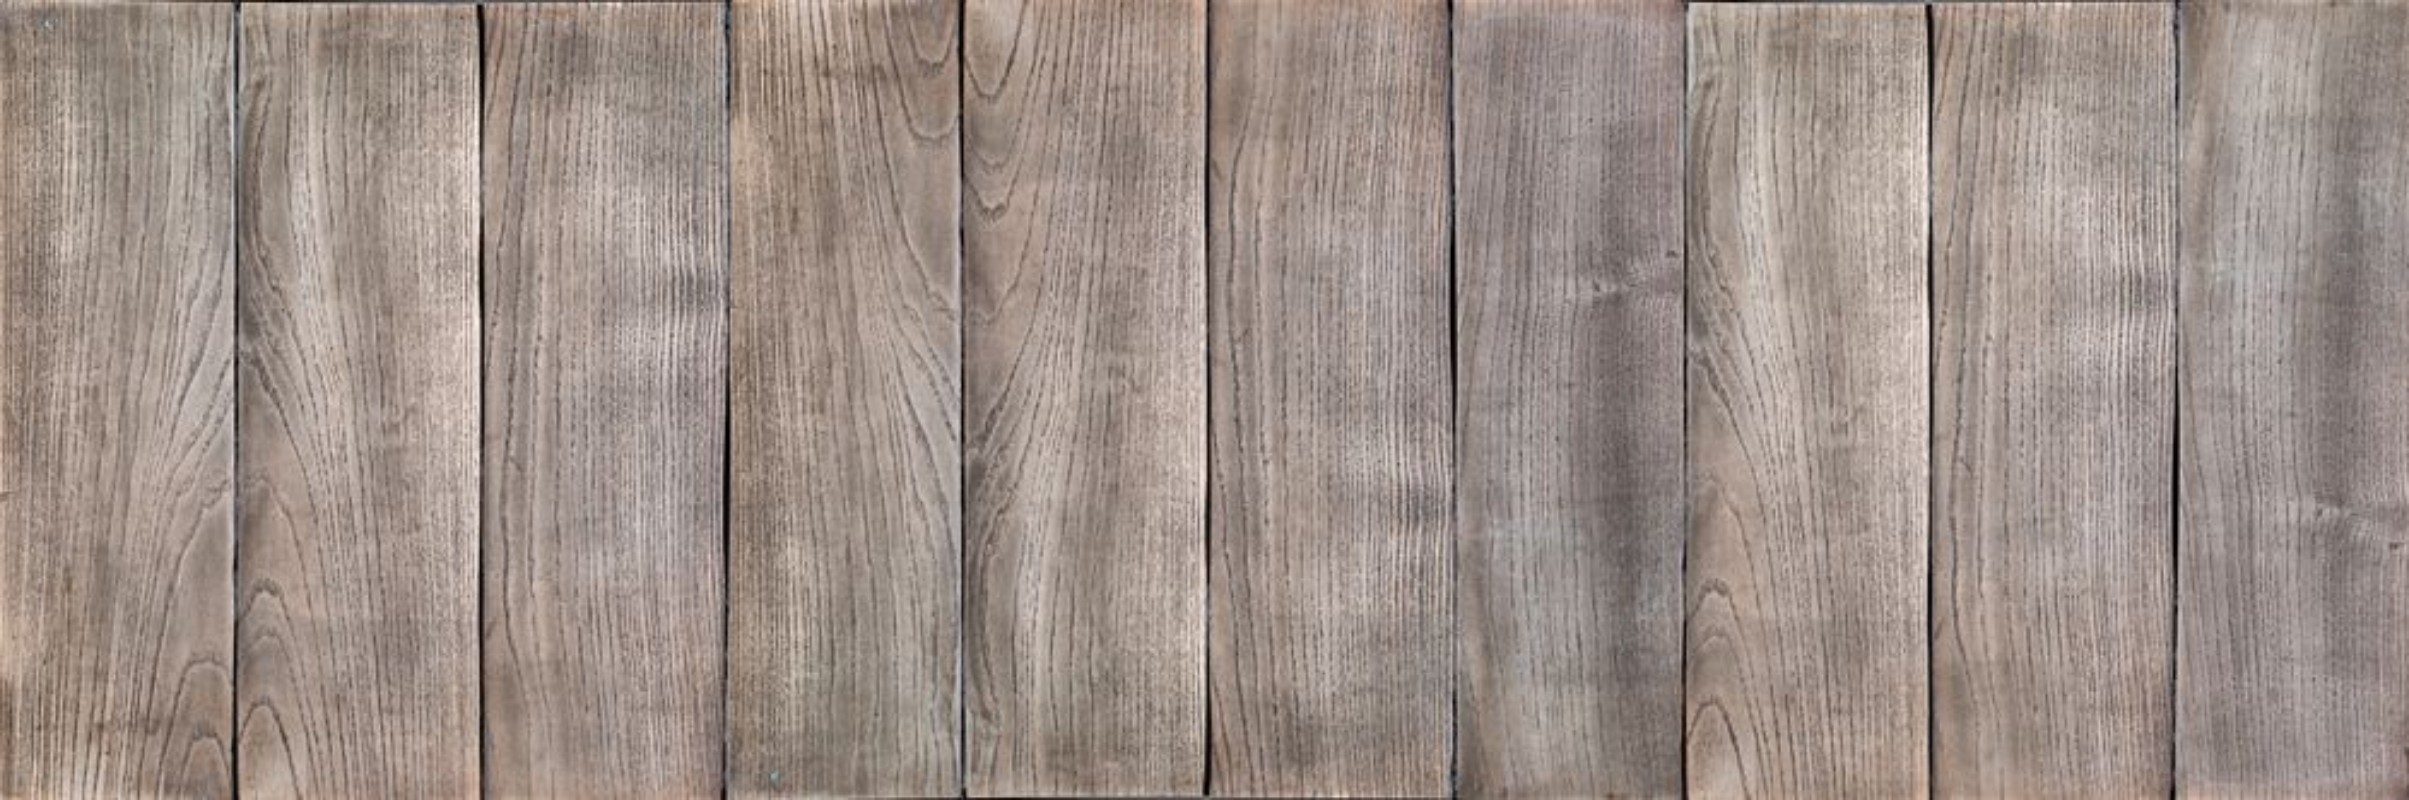 Image de Wood background or texture